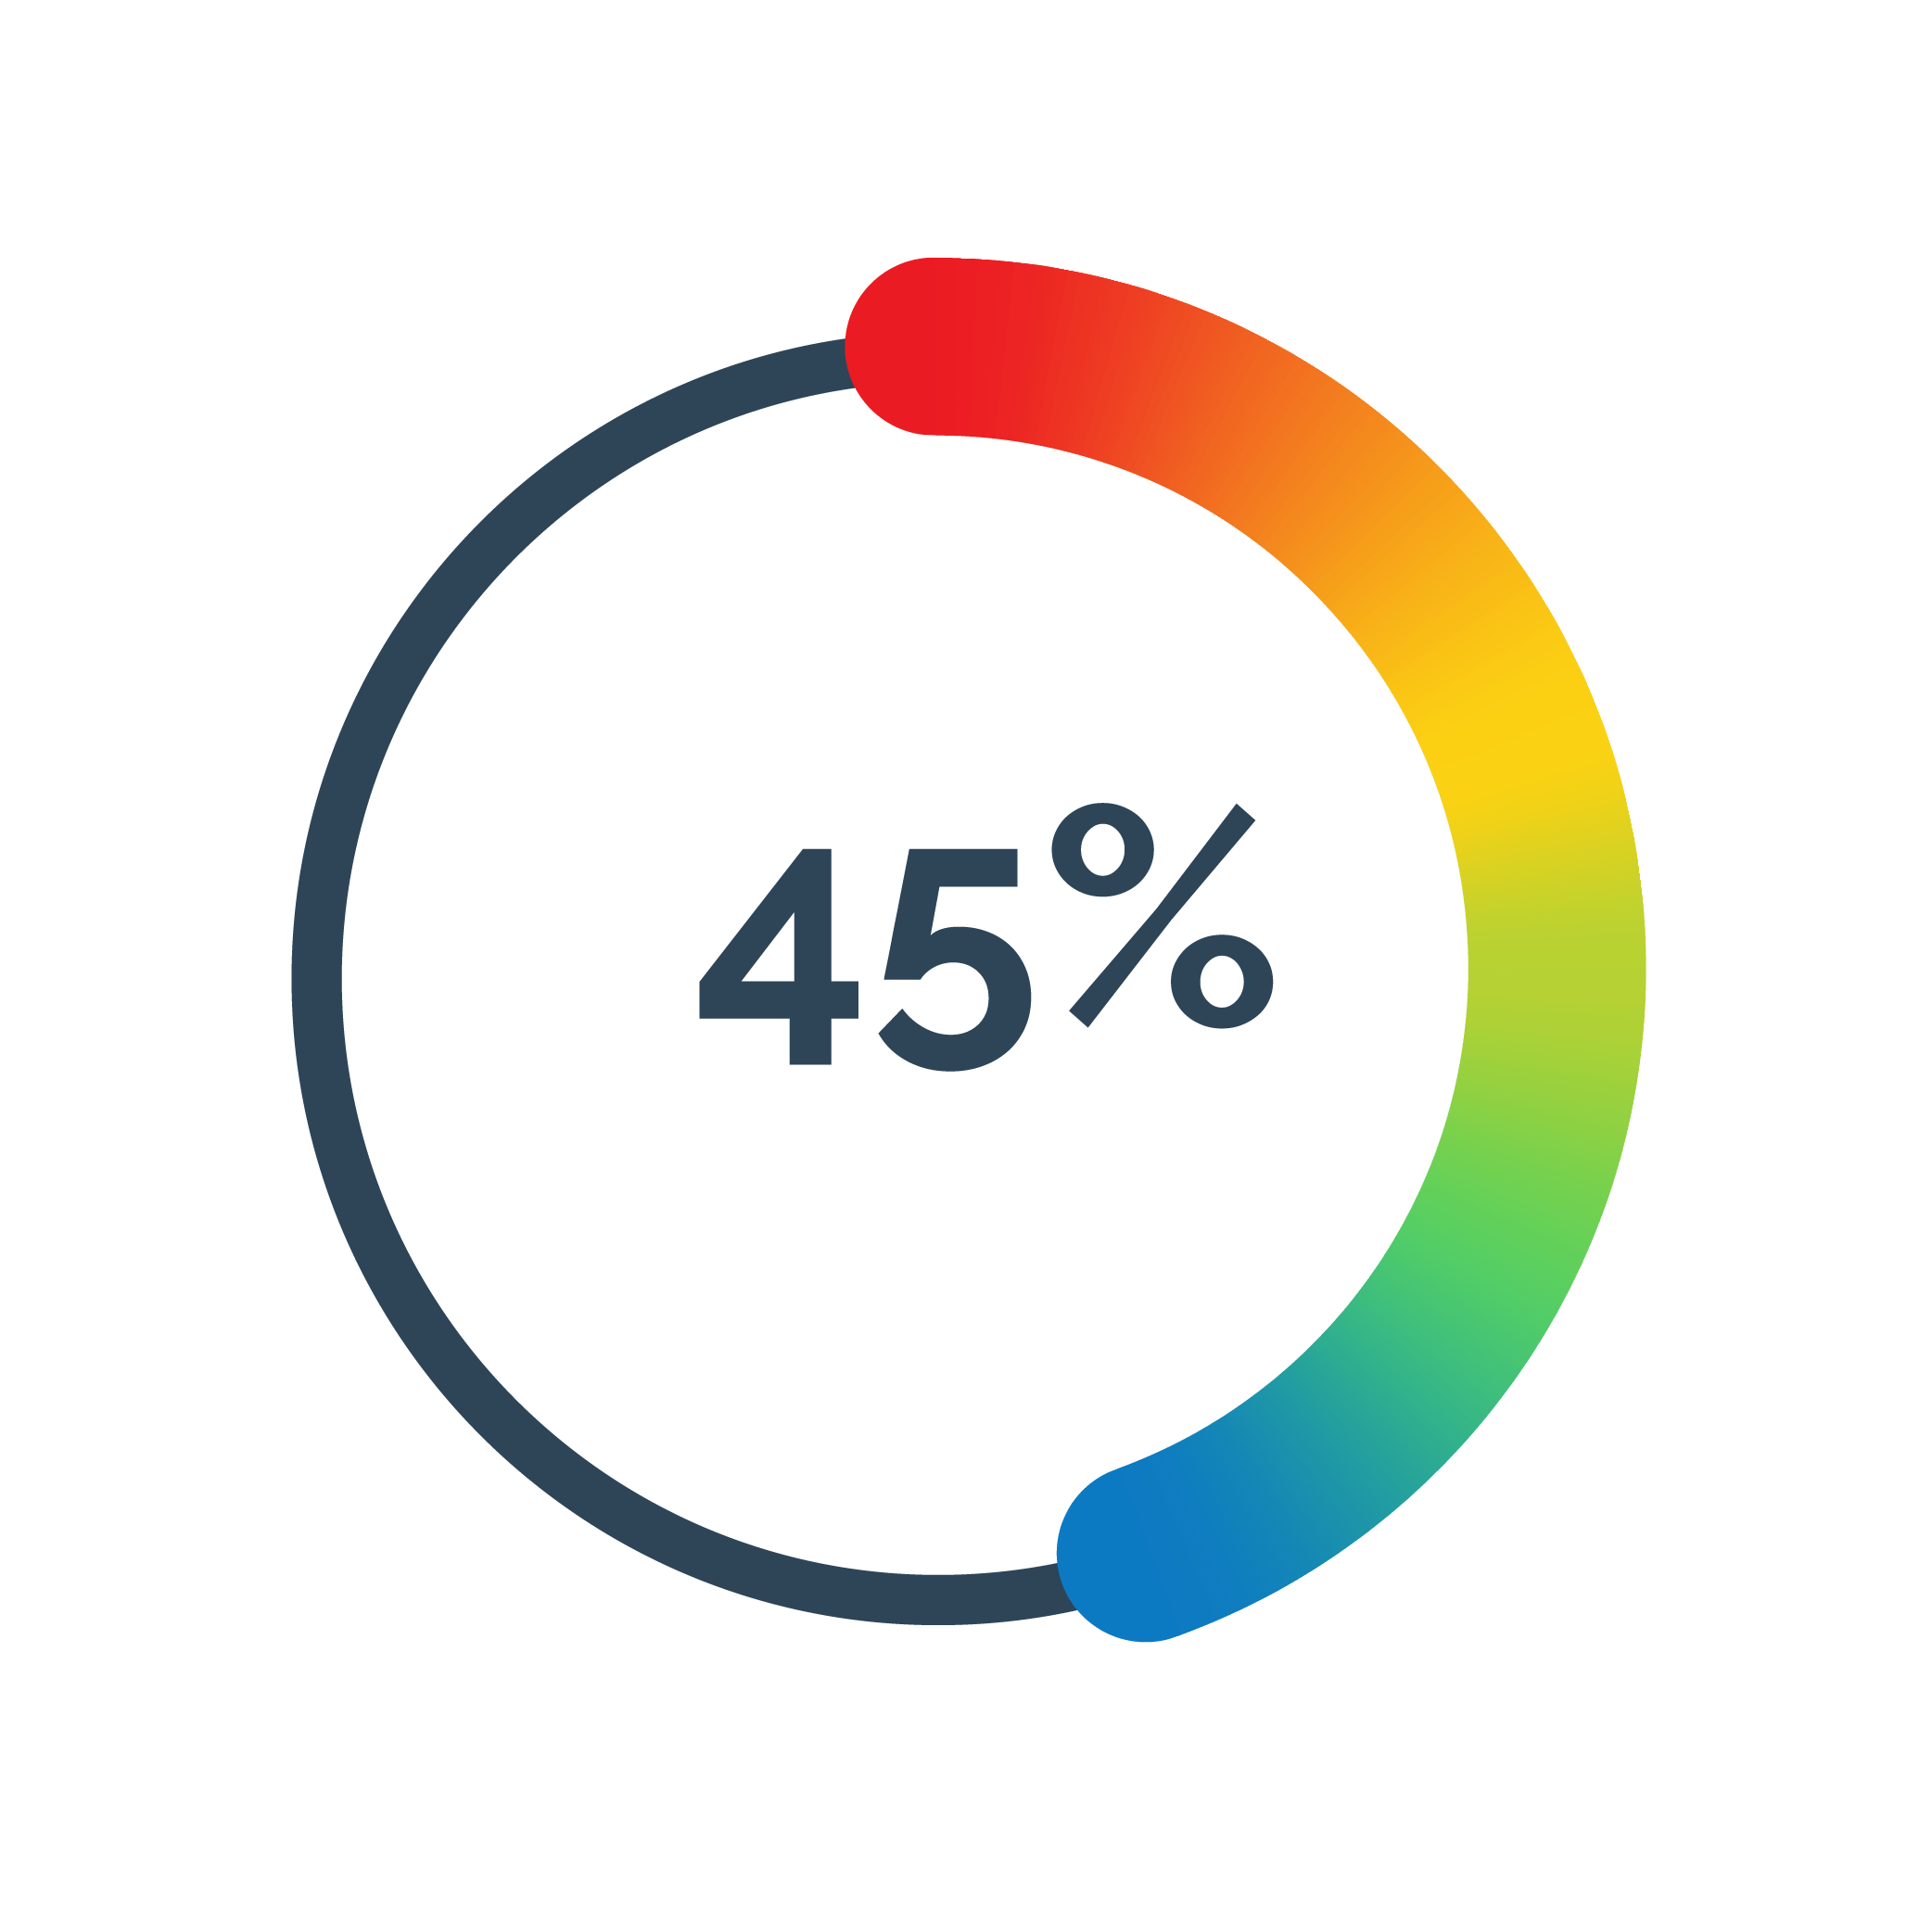 LGBTQ infographic 45%